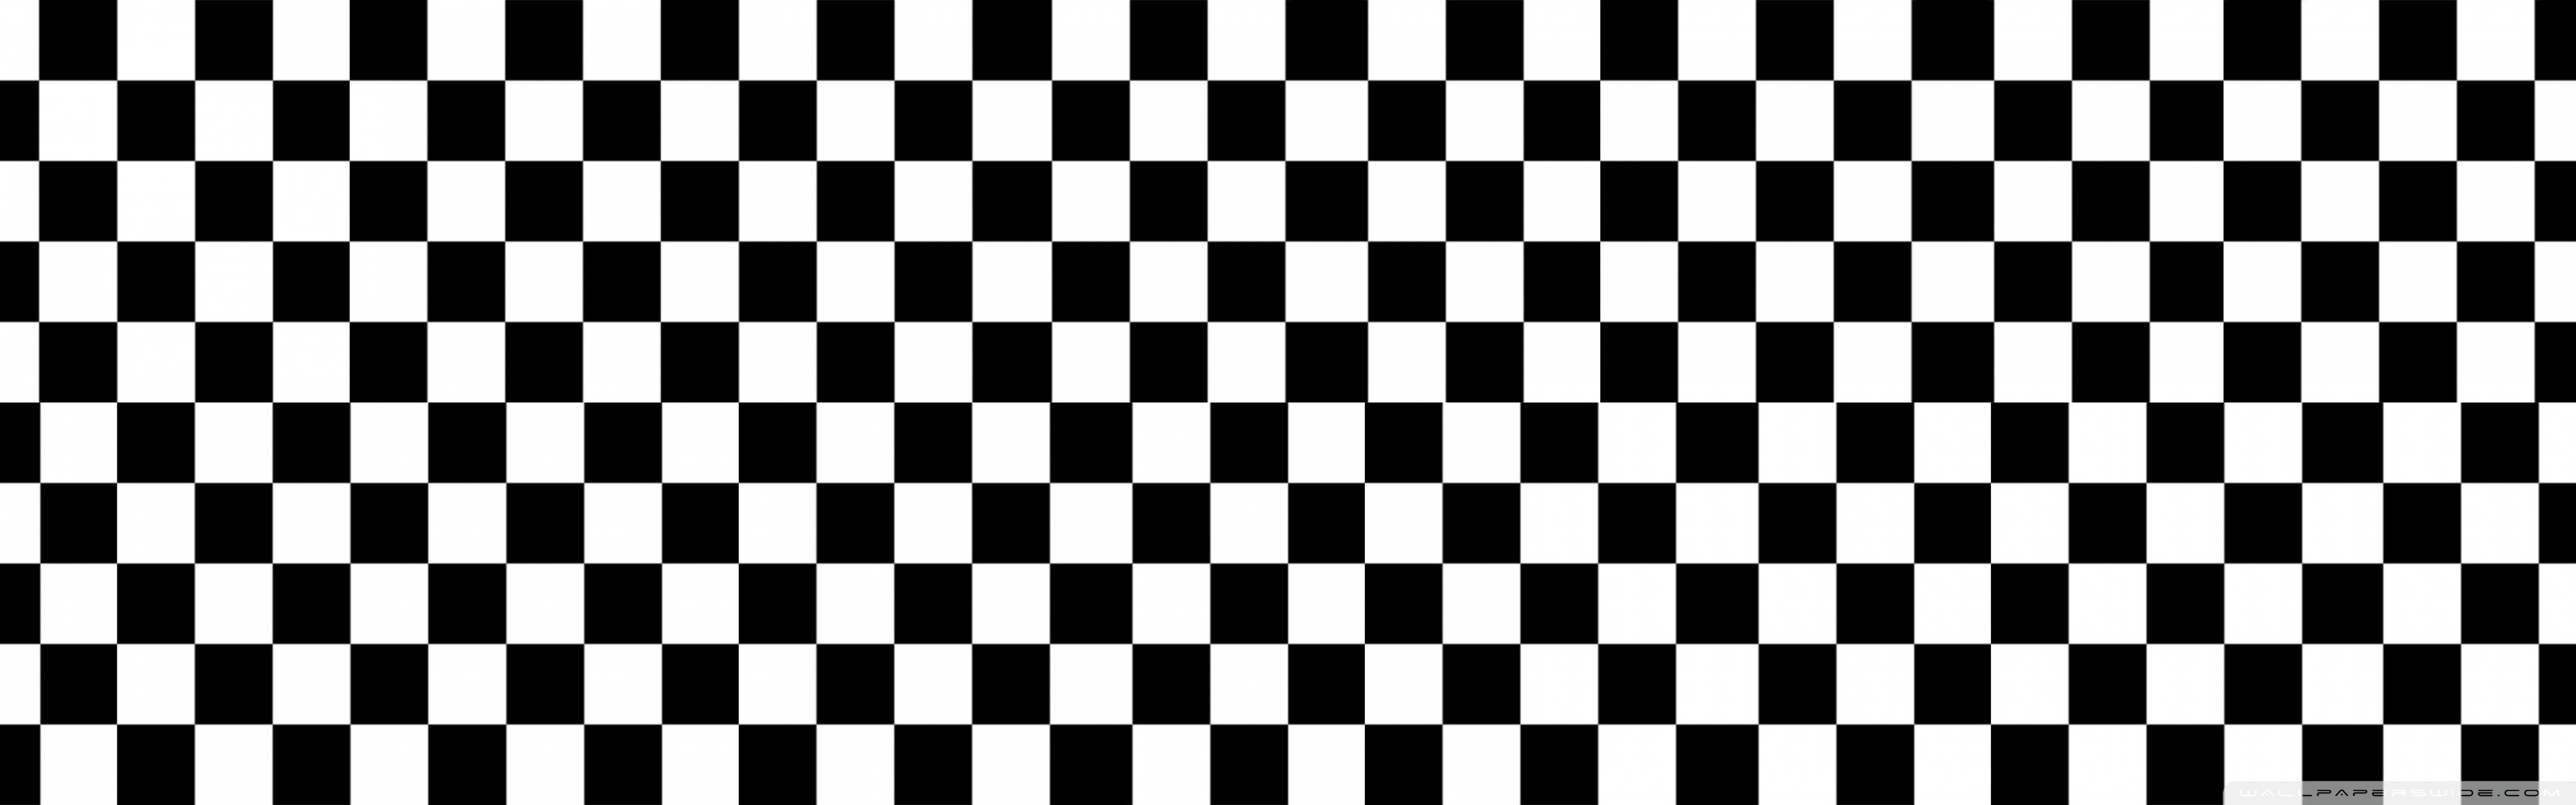 Checkerboard Ultra Hd Desktop Background Wallpaper For